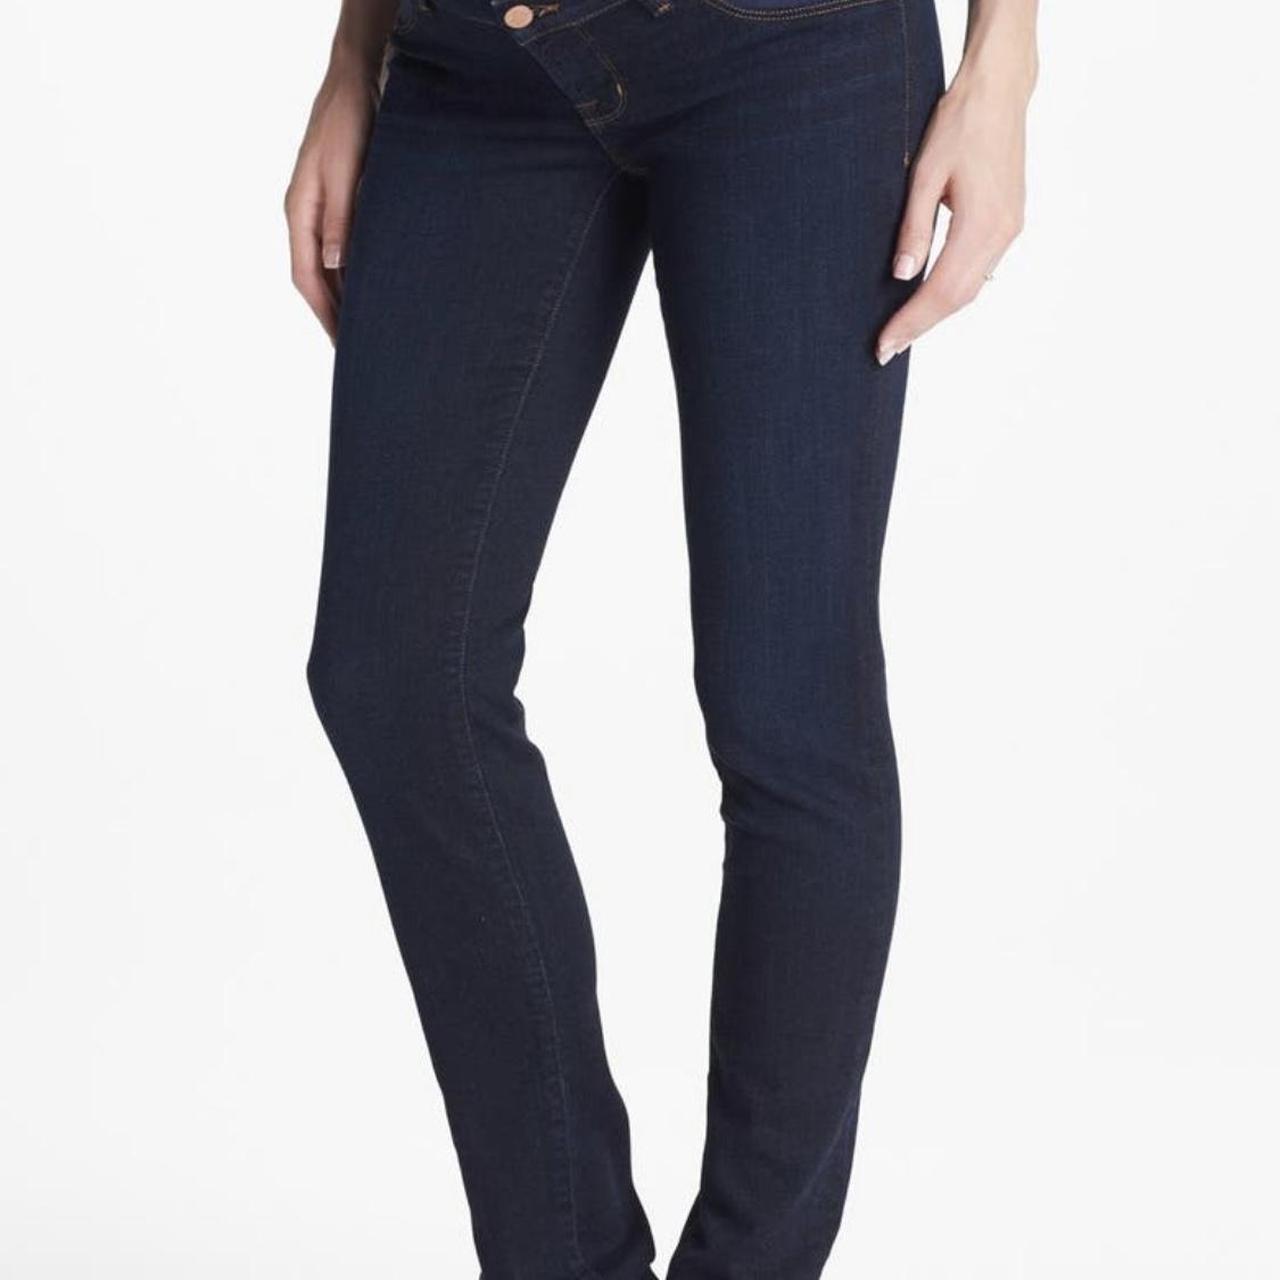 NWT J Brand maternity jeans in blue - Depop